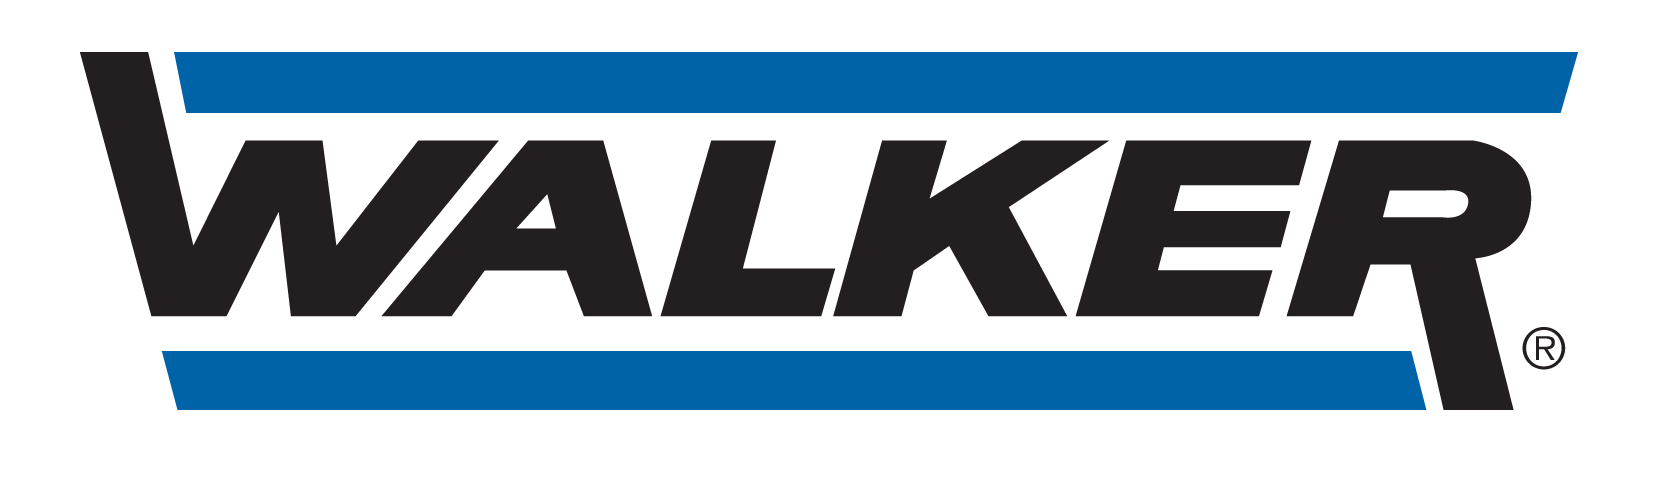 GARAGE ELECTRIC AUTO - logo Walker